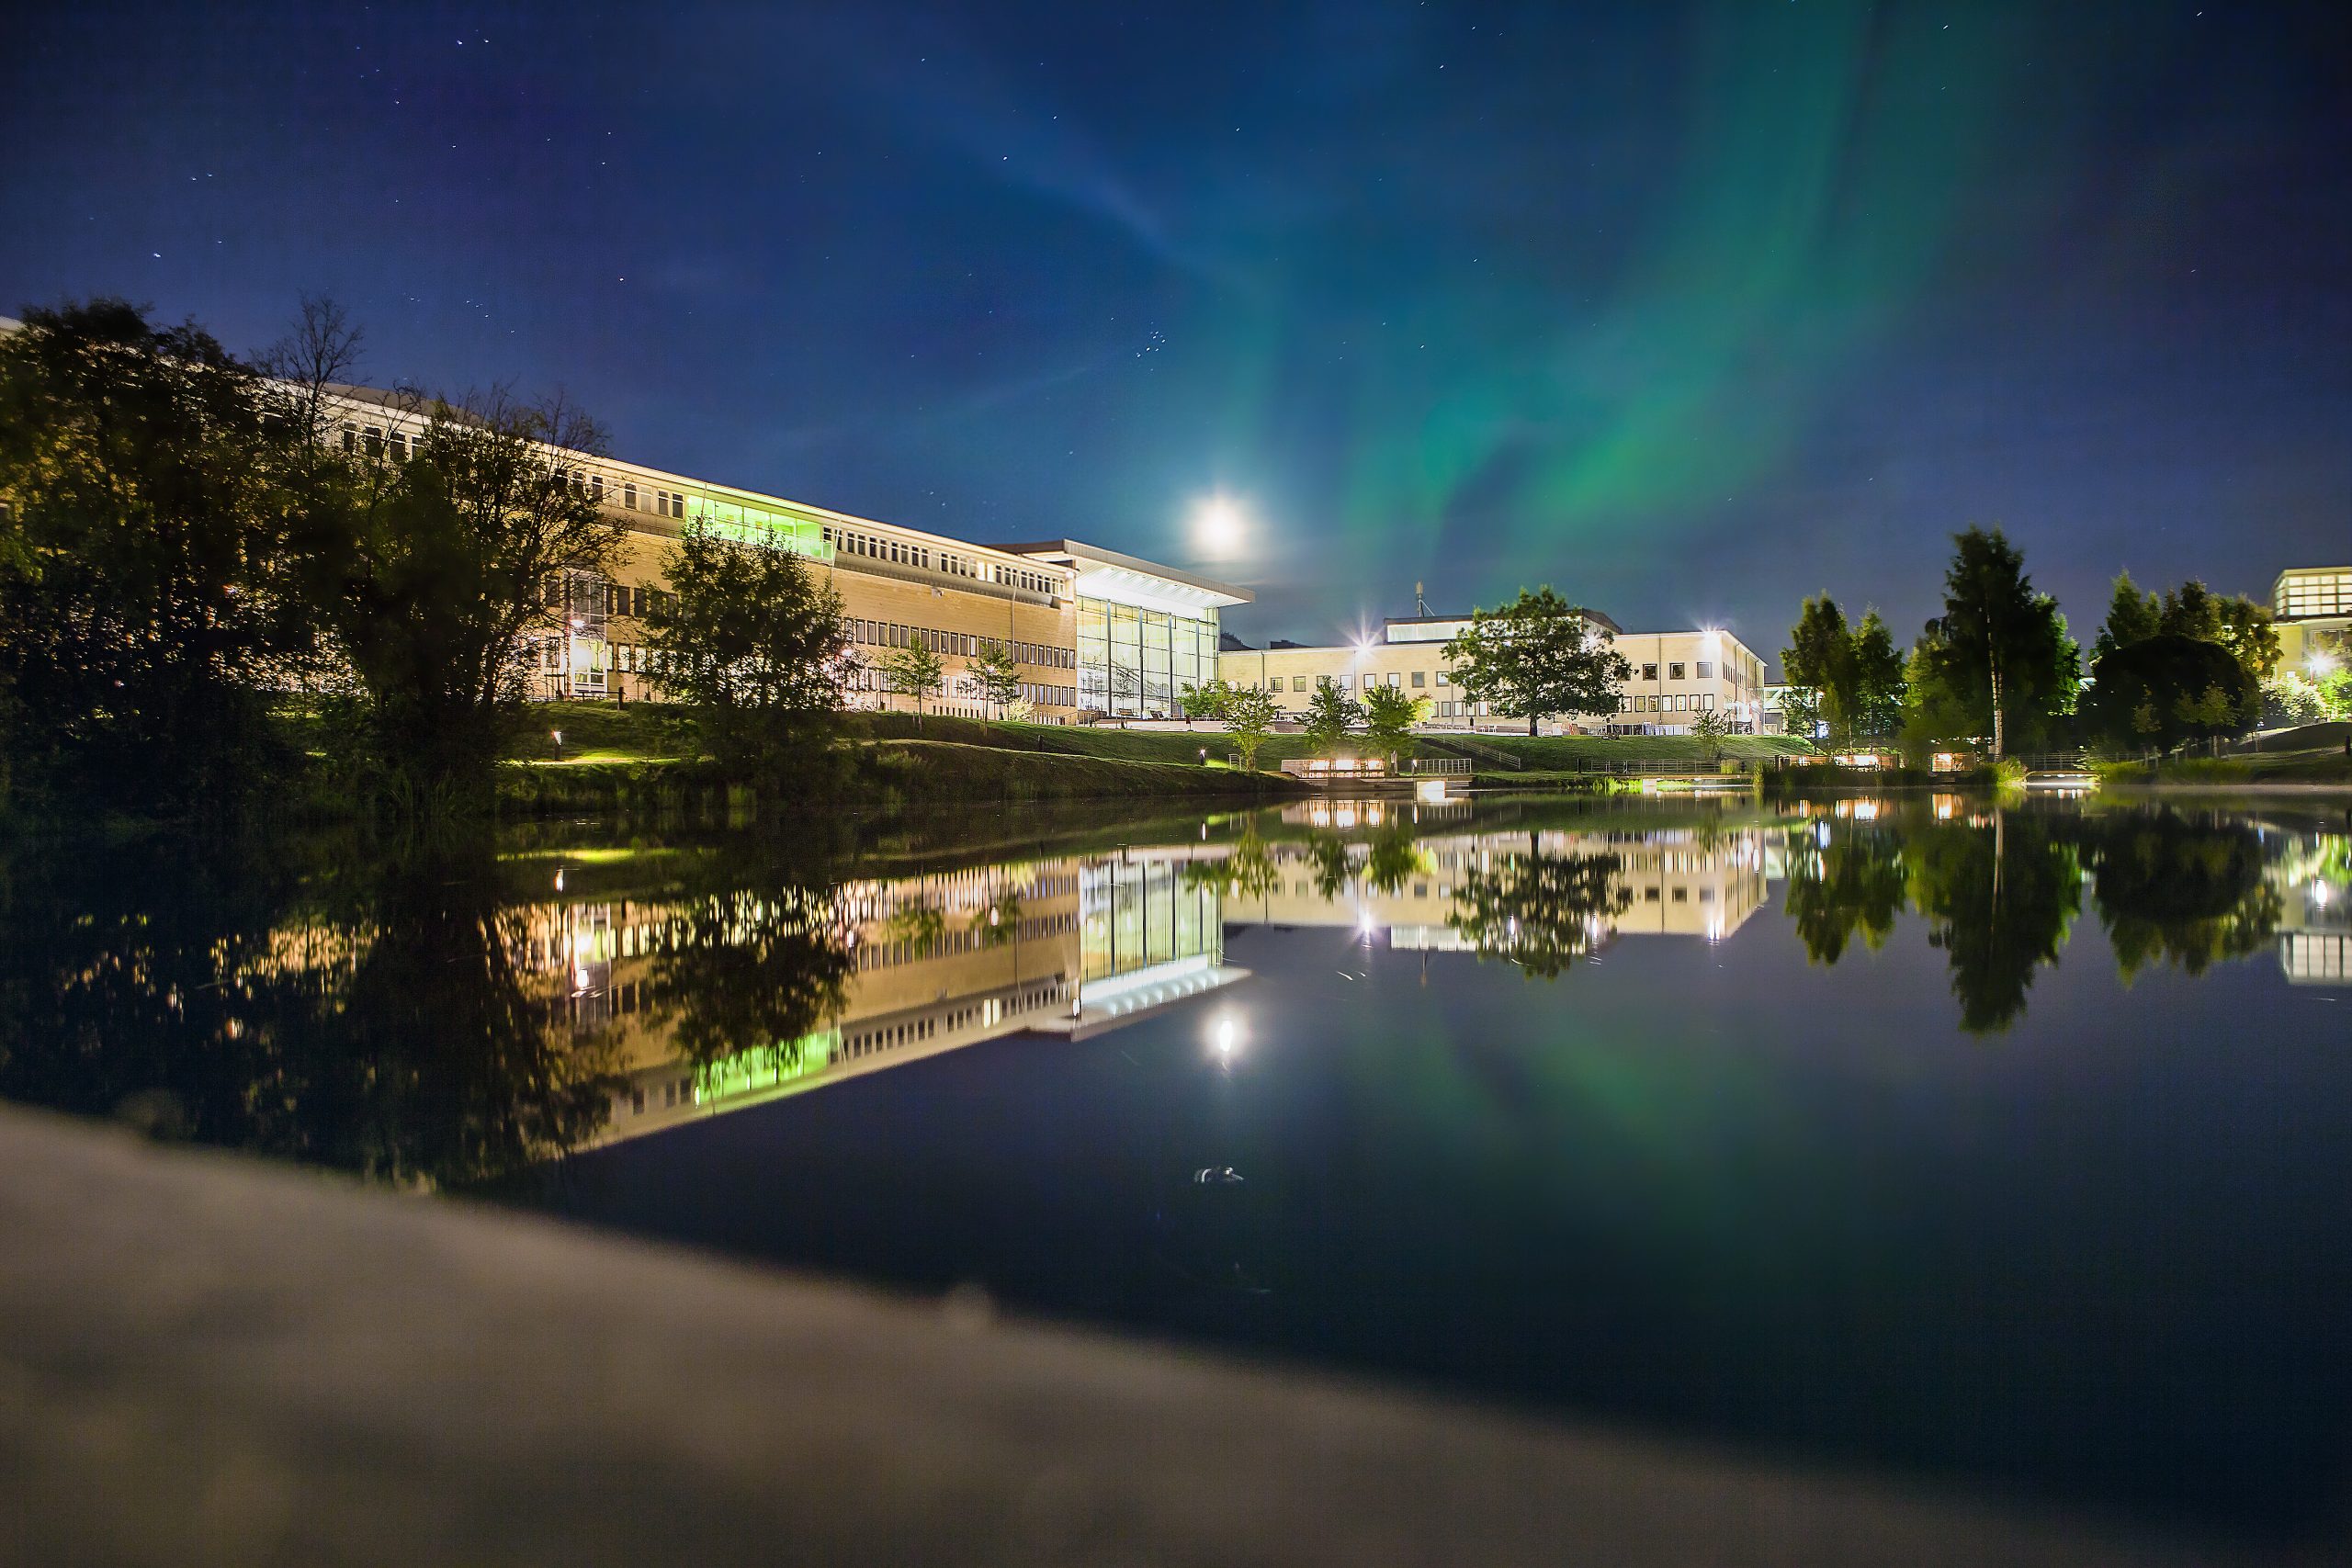 Umeå University at night wirh the northern lights in the sky. Photo: Mattias Pettersson